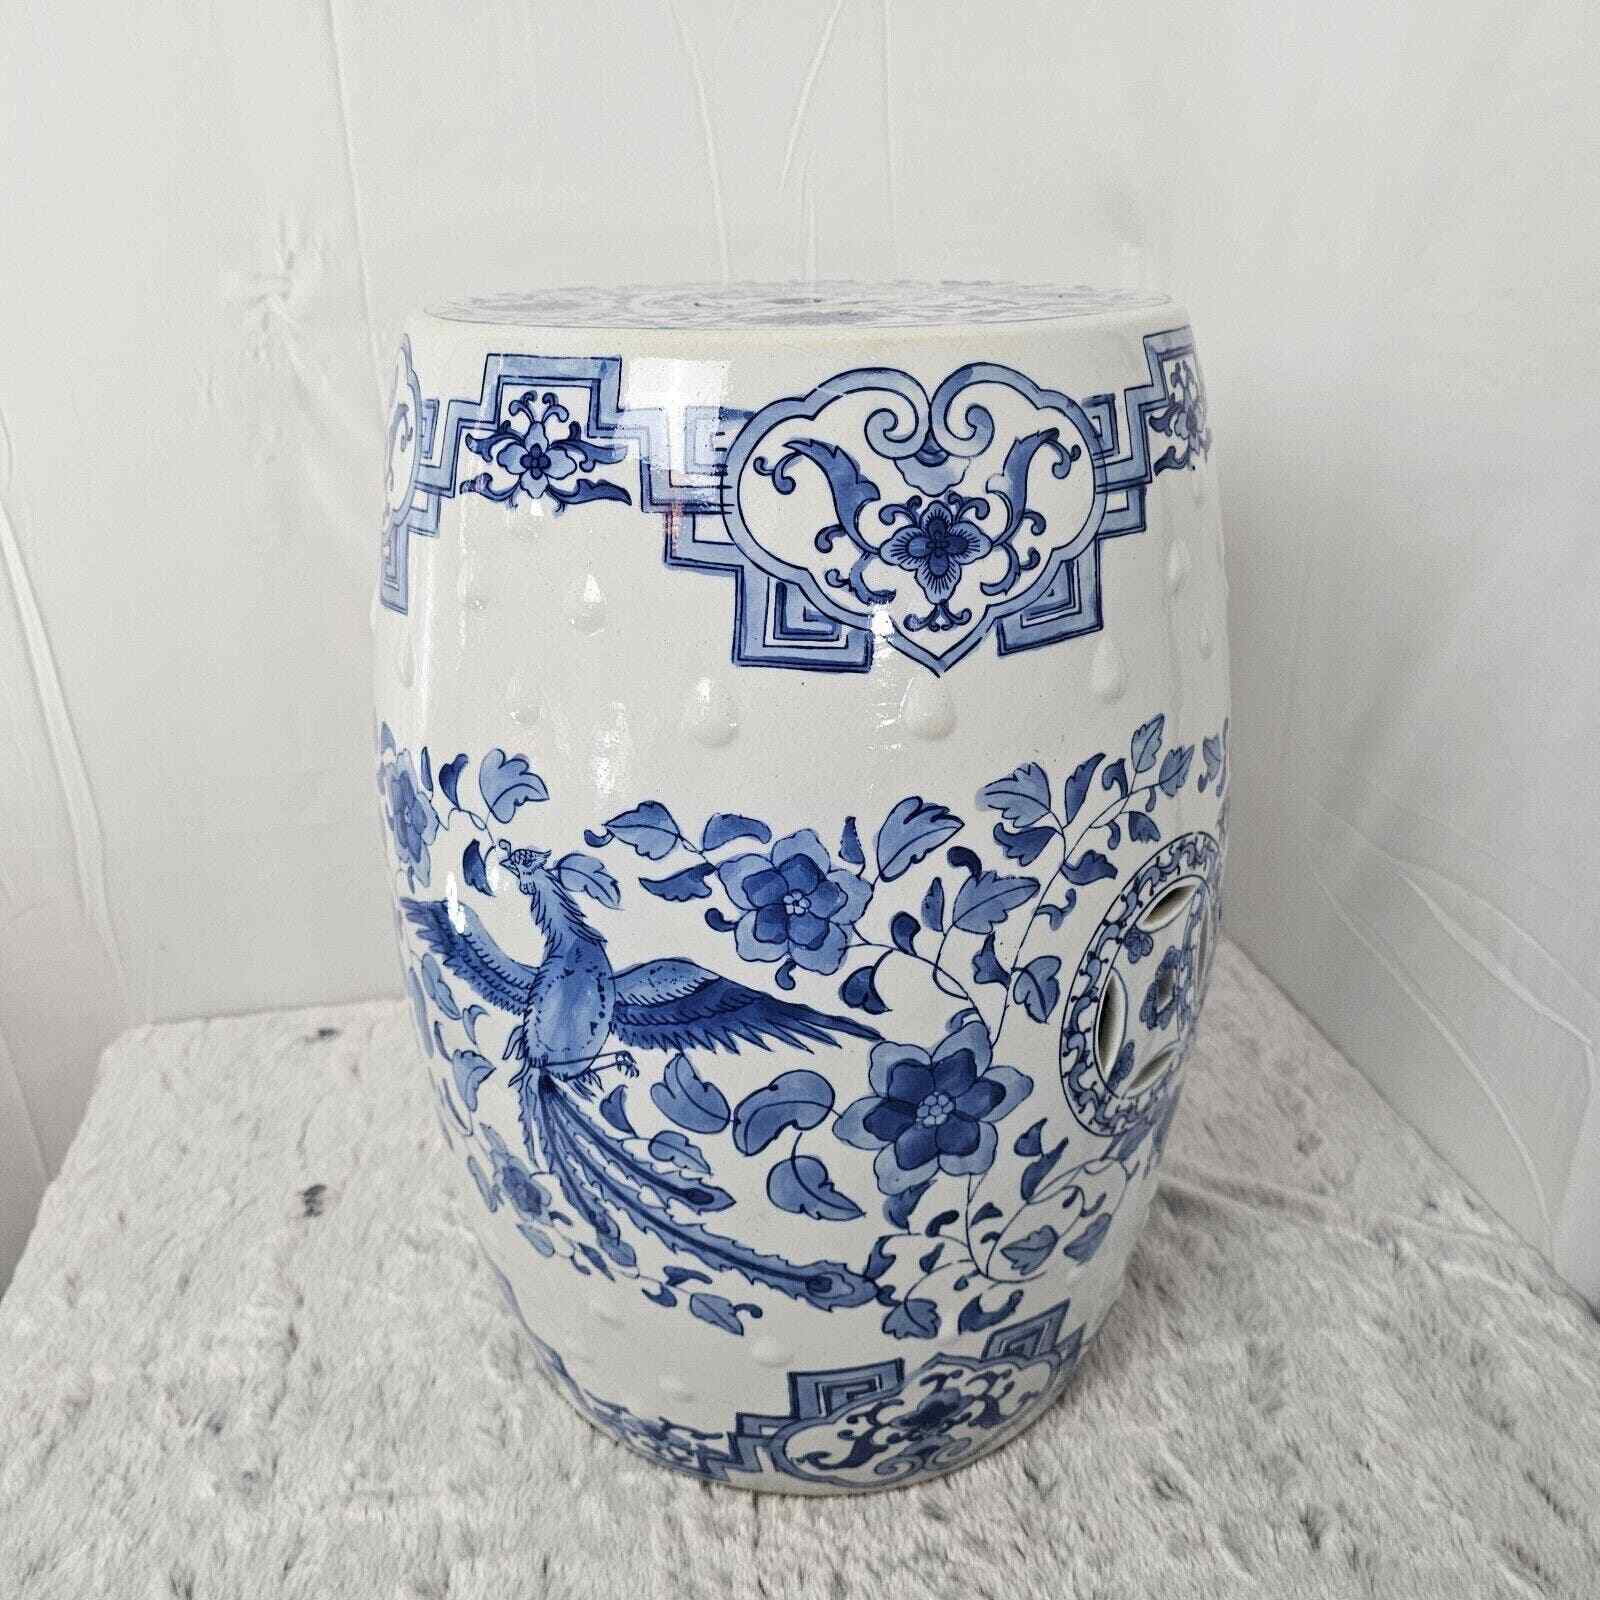 Chinese Chinoiserie Blue And White Ceramic Garden Seat 20th Century 18.5”H x 14”